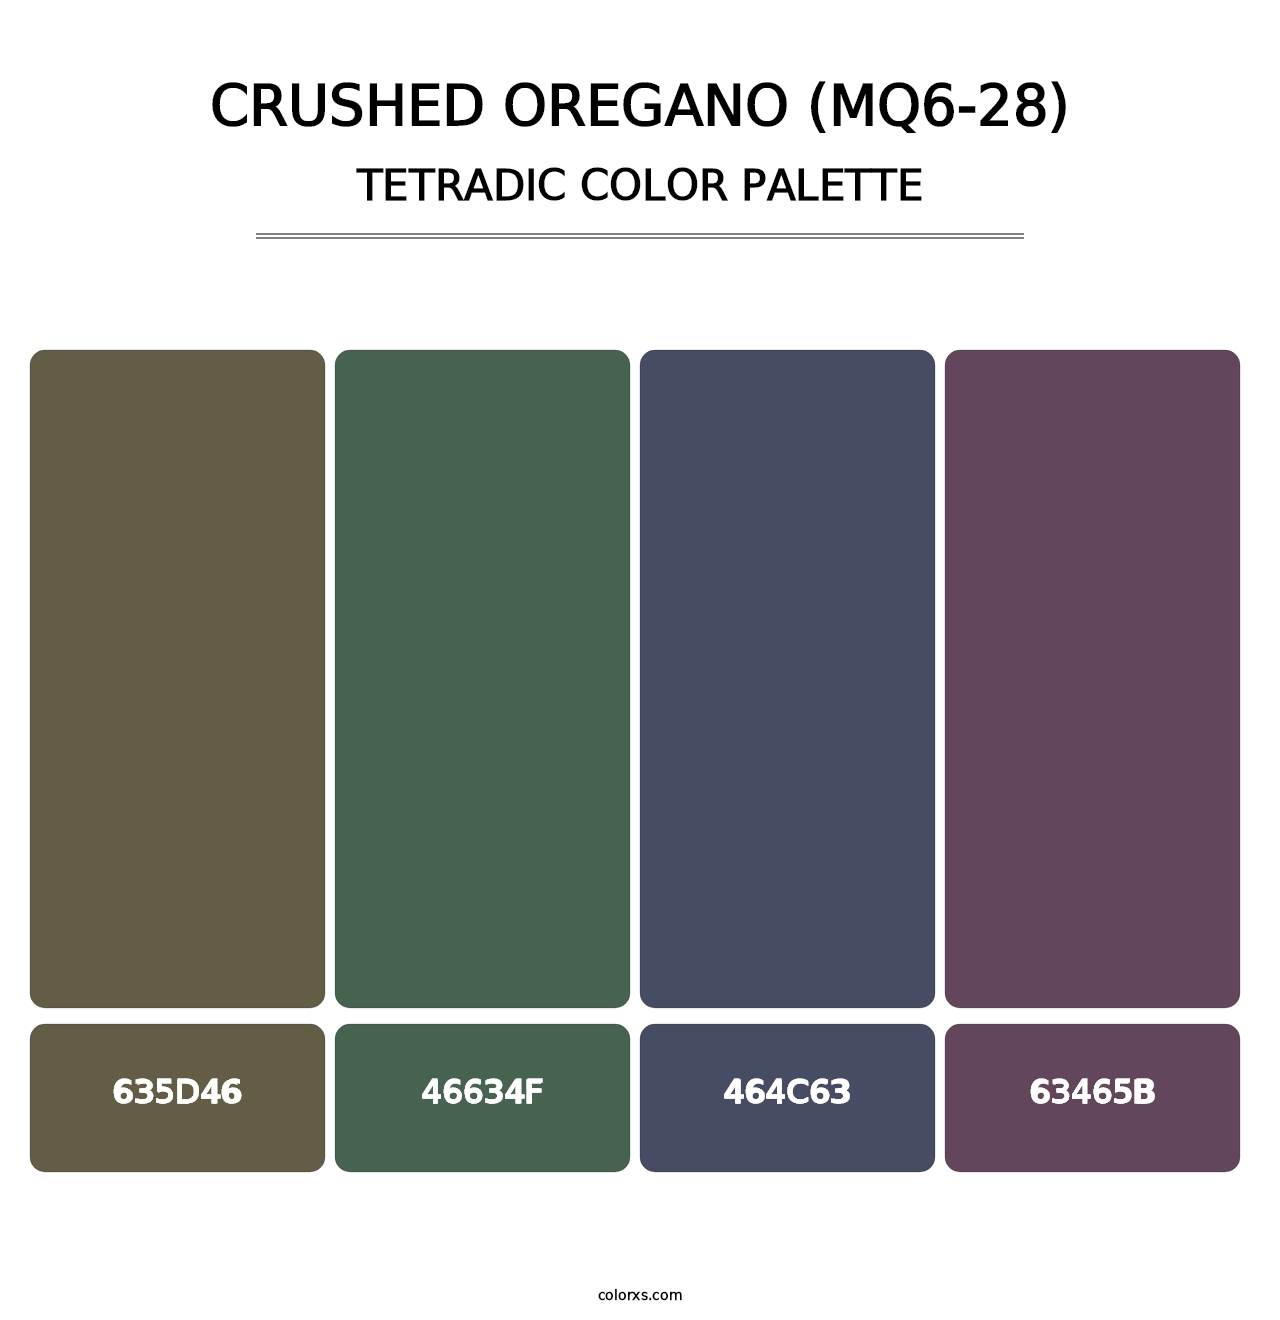 Crushed Oregano (MQ6-28) - Tetradic Color Palette